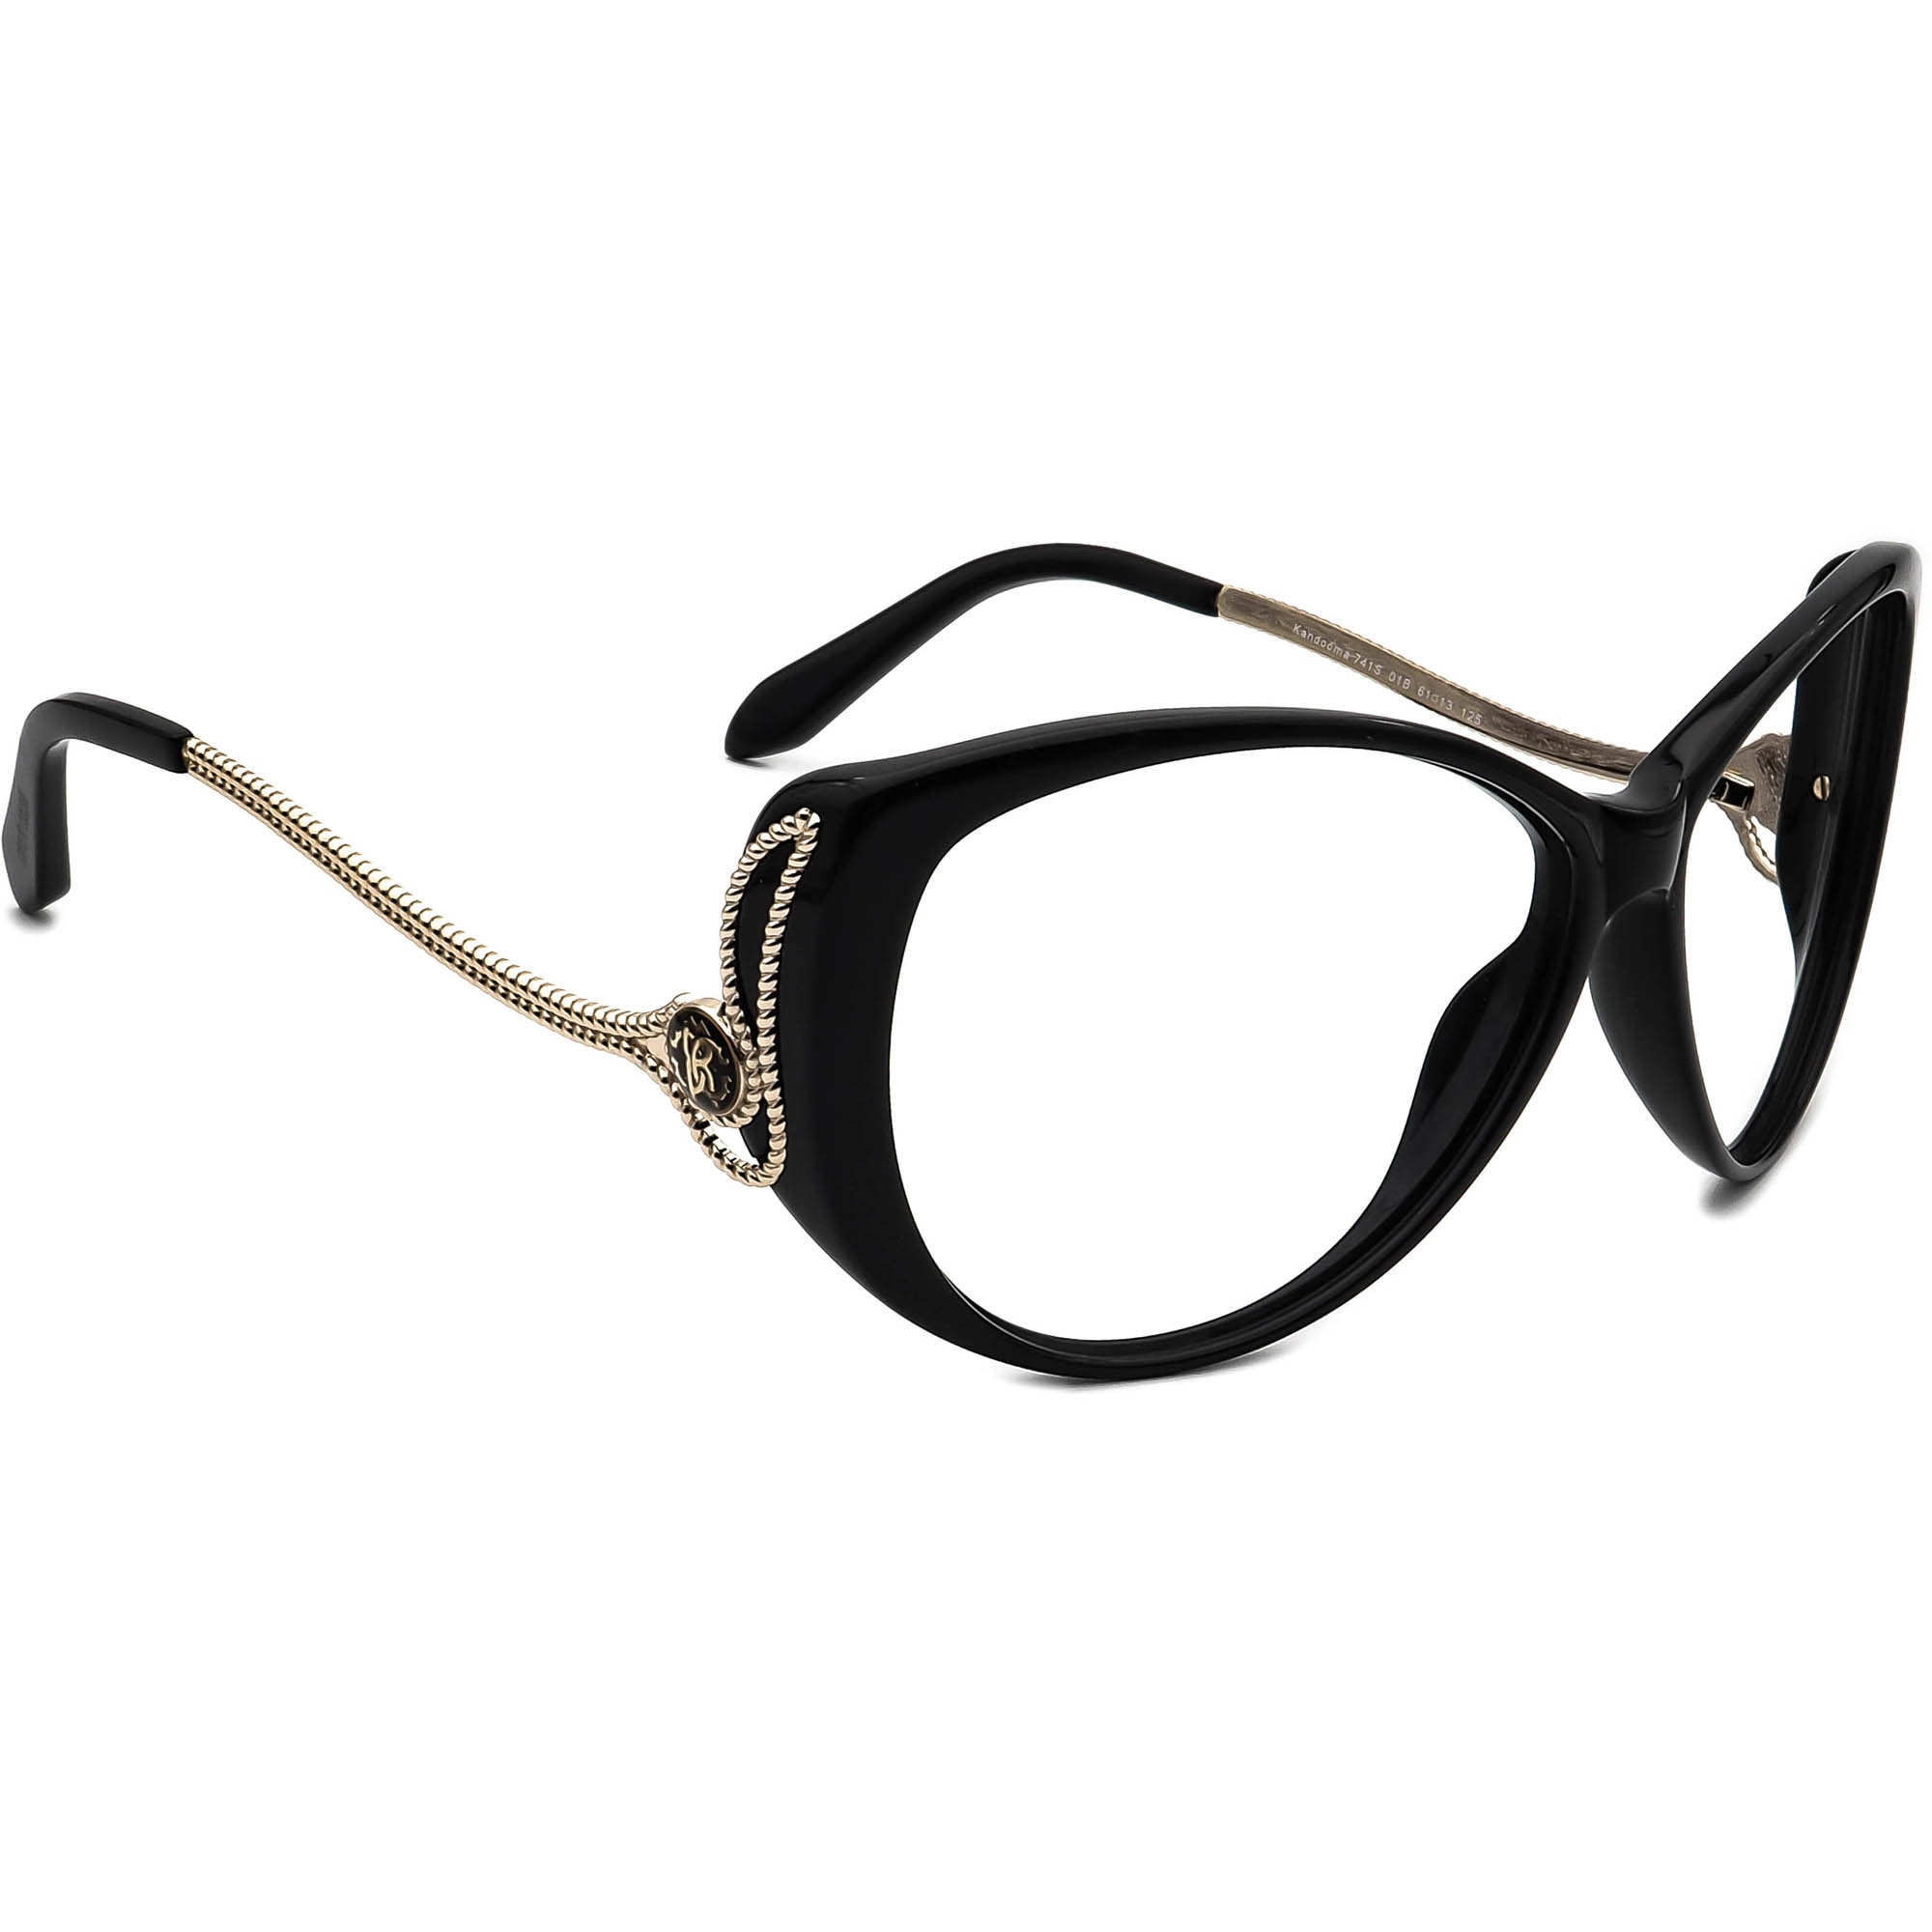 Måge slave falme Roberto Cavalli Sunglasses Frame Only Kandooma 741S Black/gold - Etsy Sweden